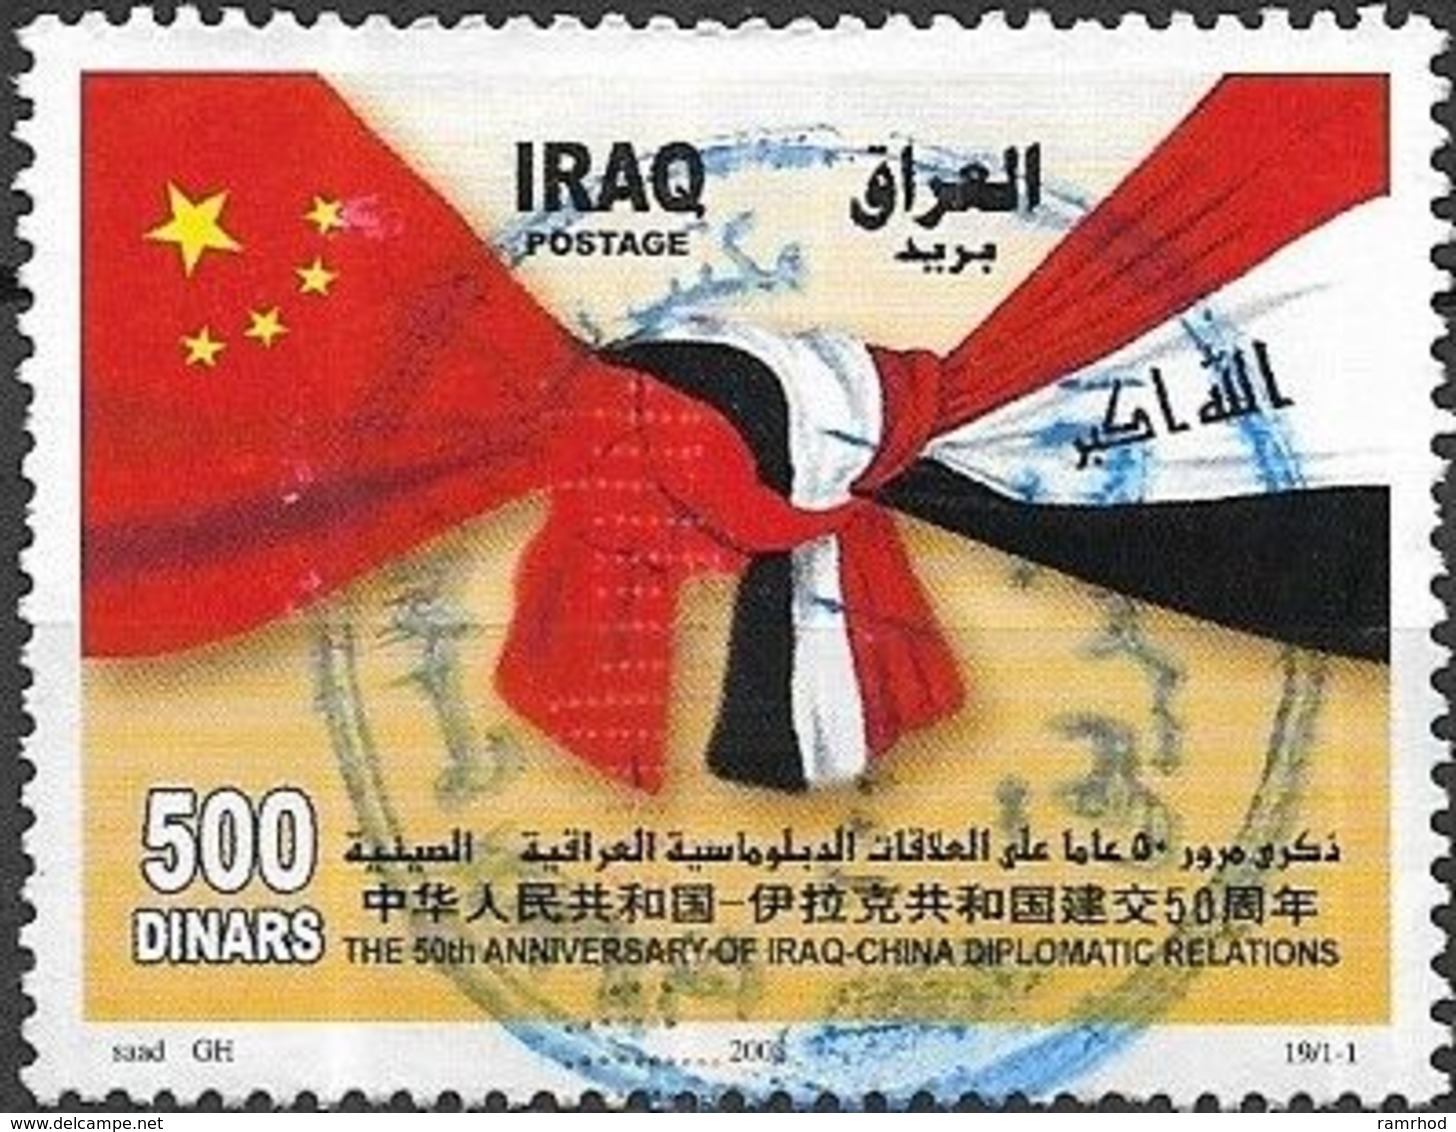 IRAQ 2008 50th Anniversary Of IraqChina Diplomatic Relations - 500d - Flags Intertwined FU - Iraq